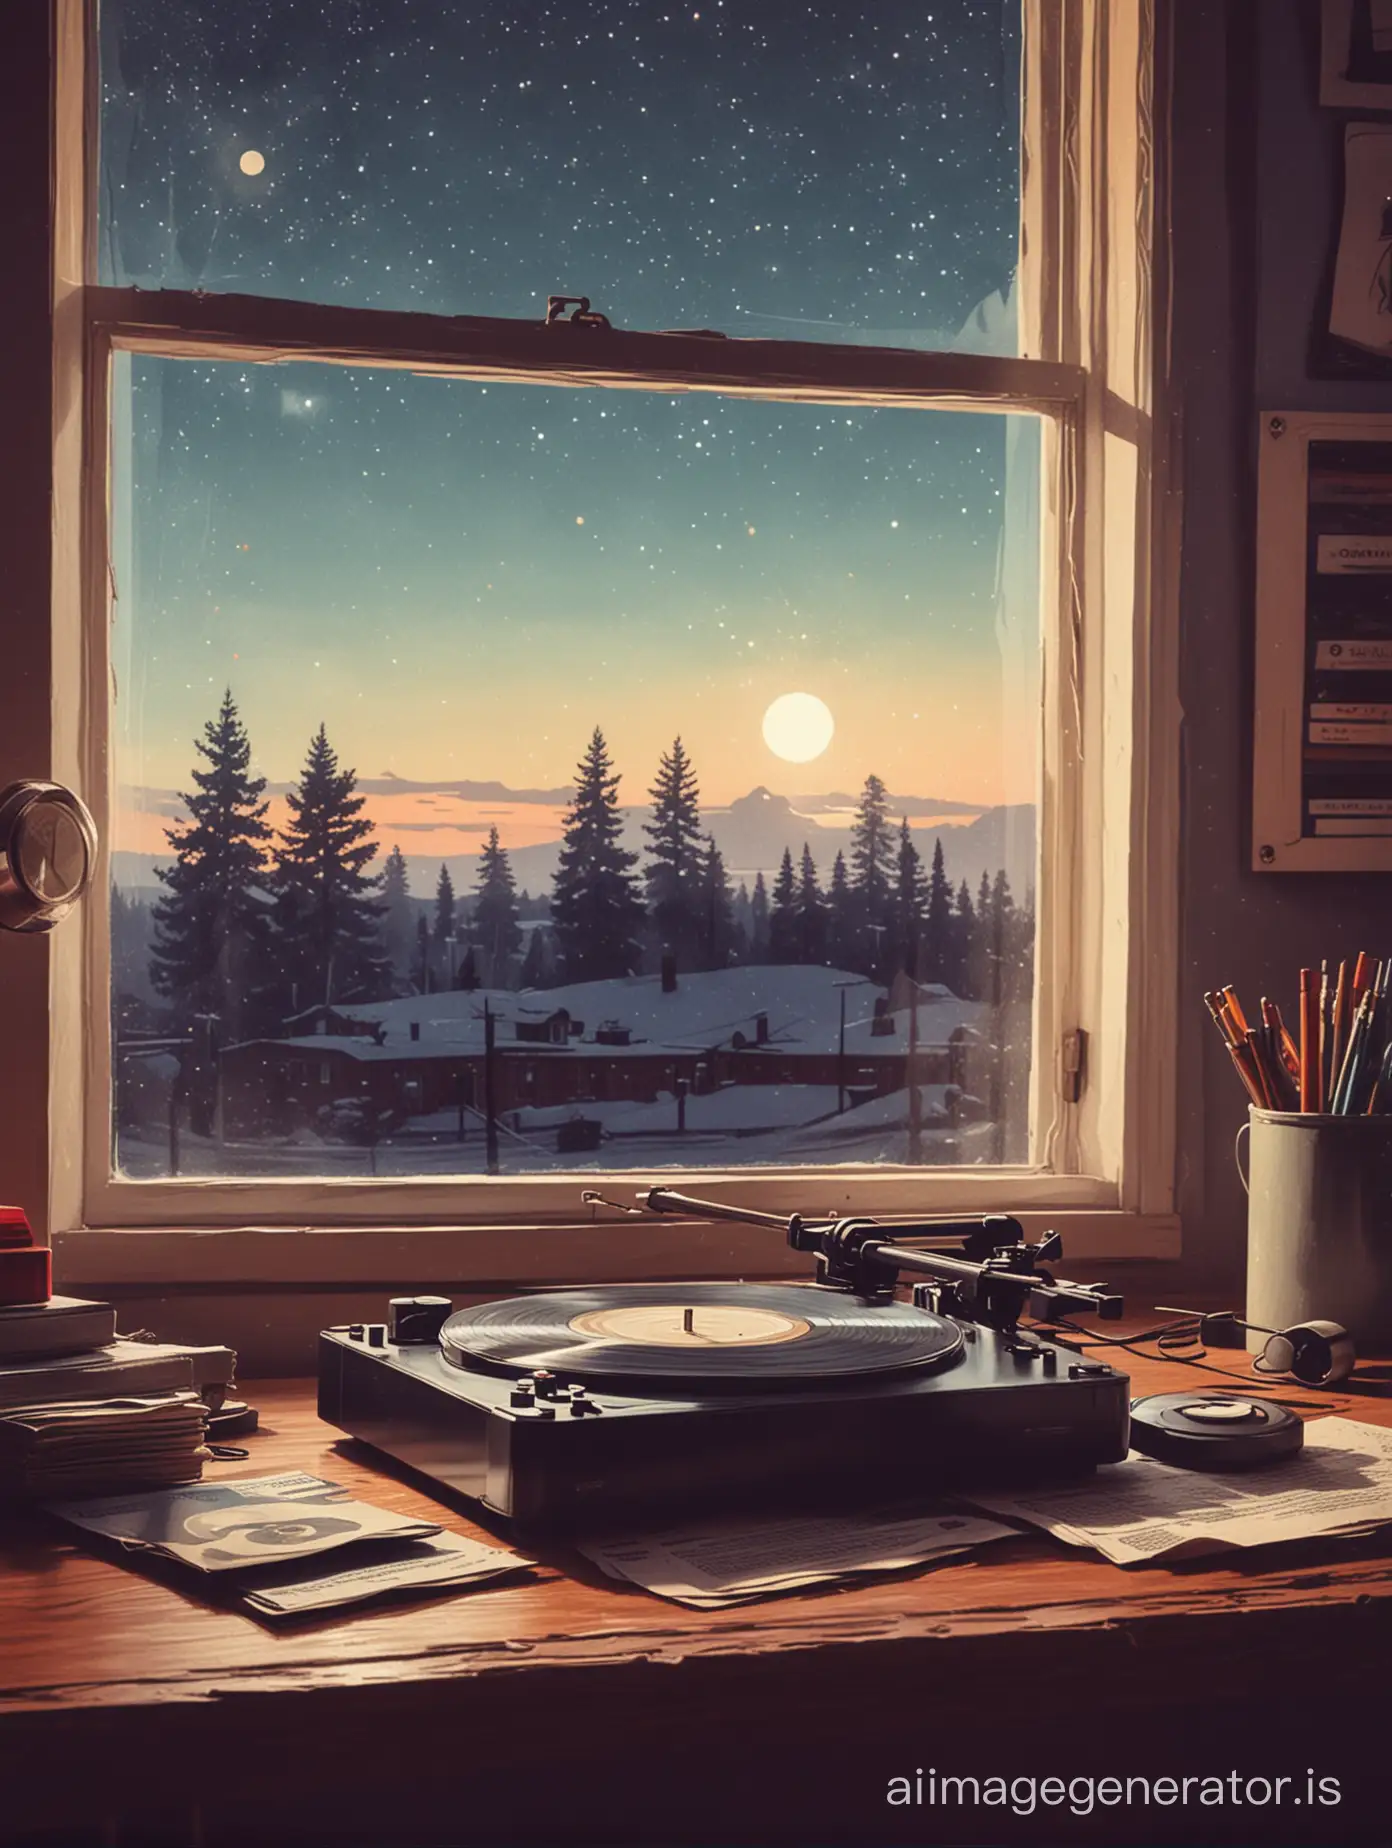 Vintage-Vinyl-Player-on-Desk-with-Night-Sky-View-Communist-Poster-Style-Illustration